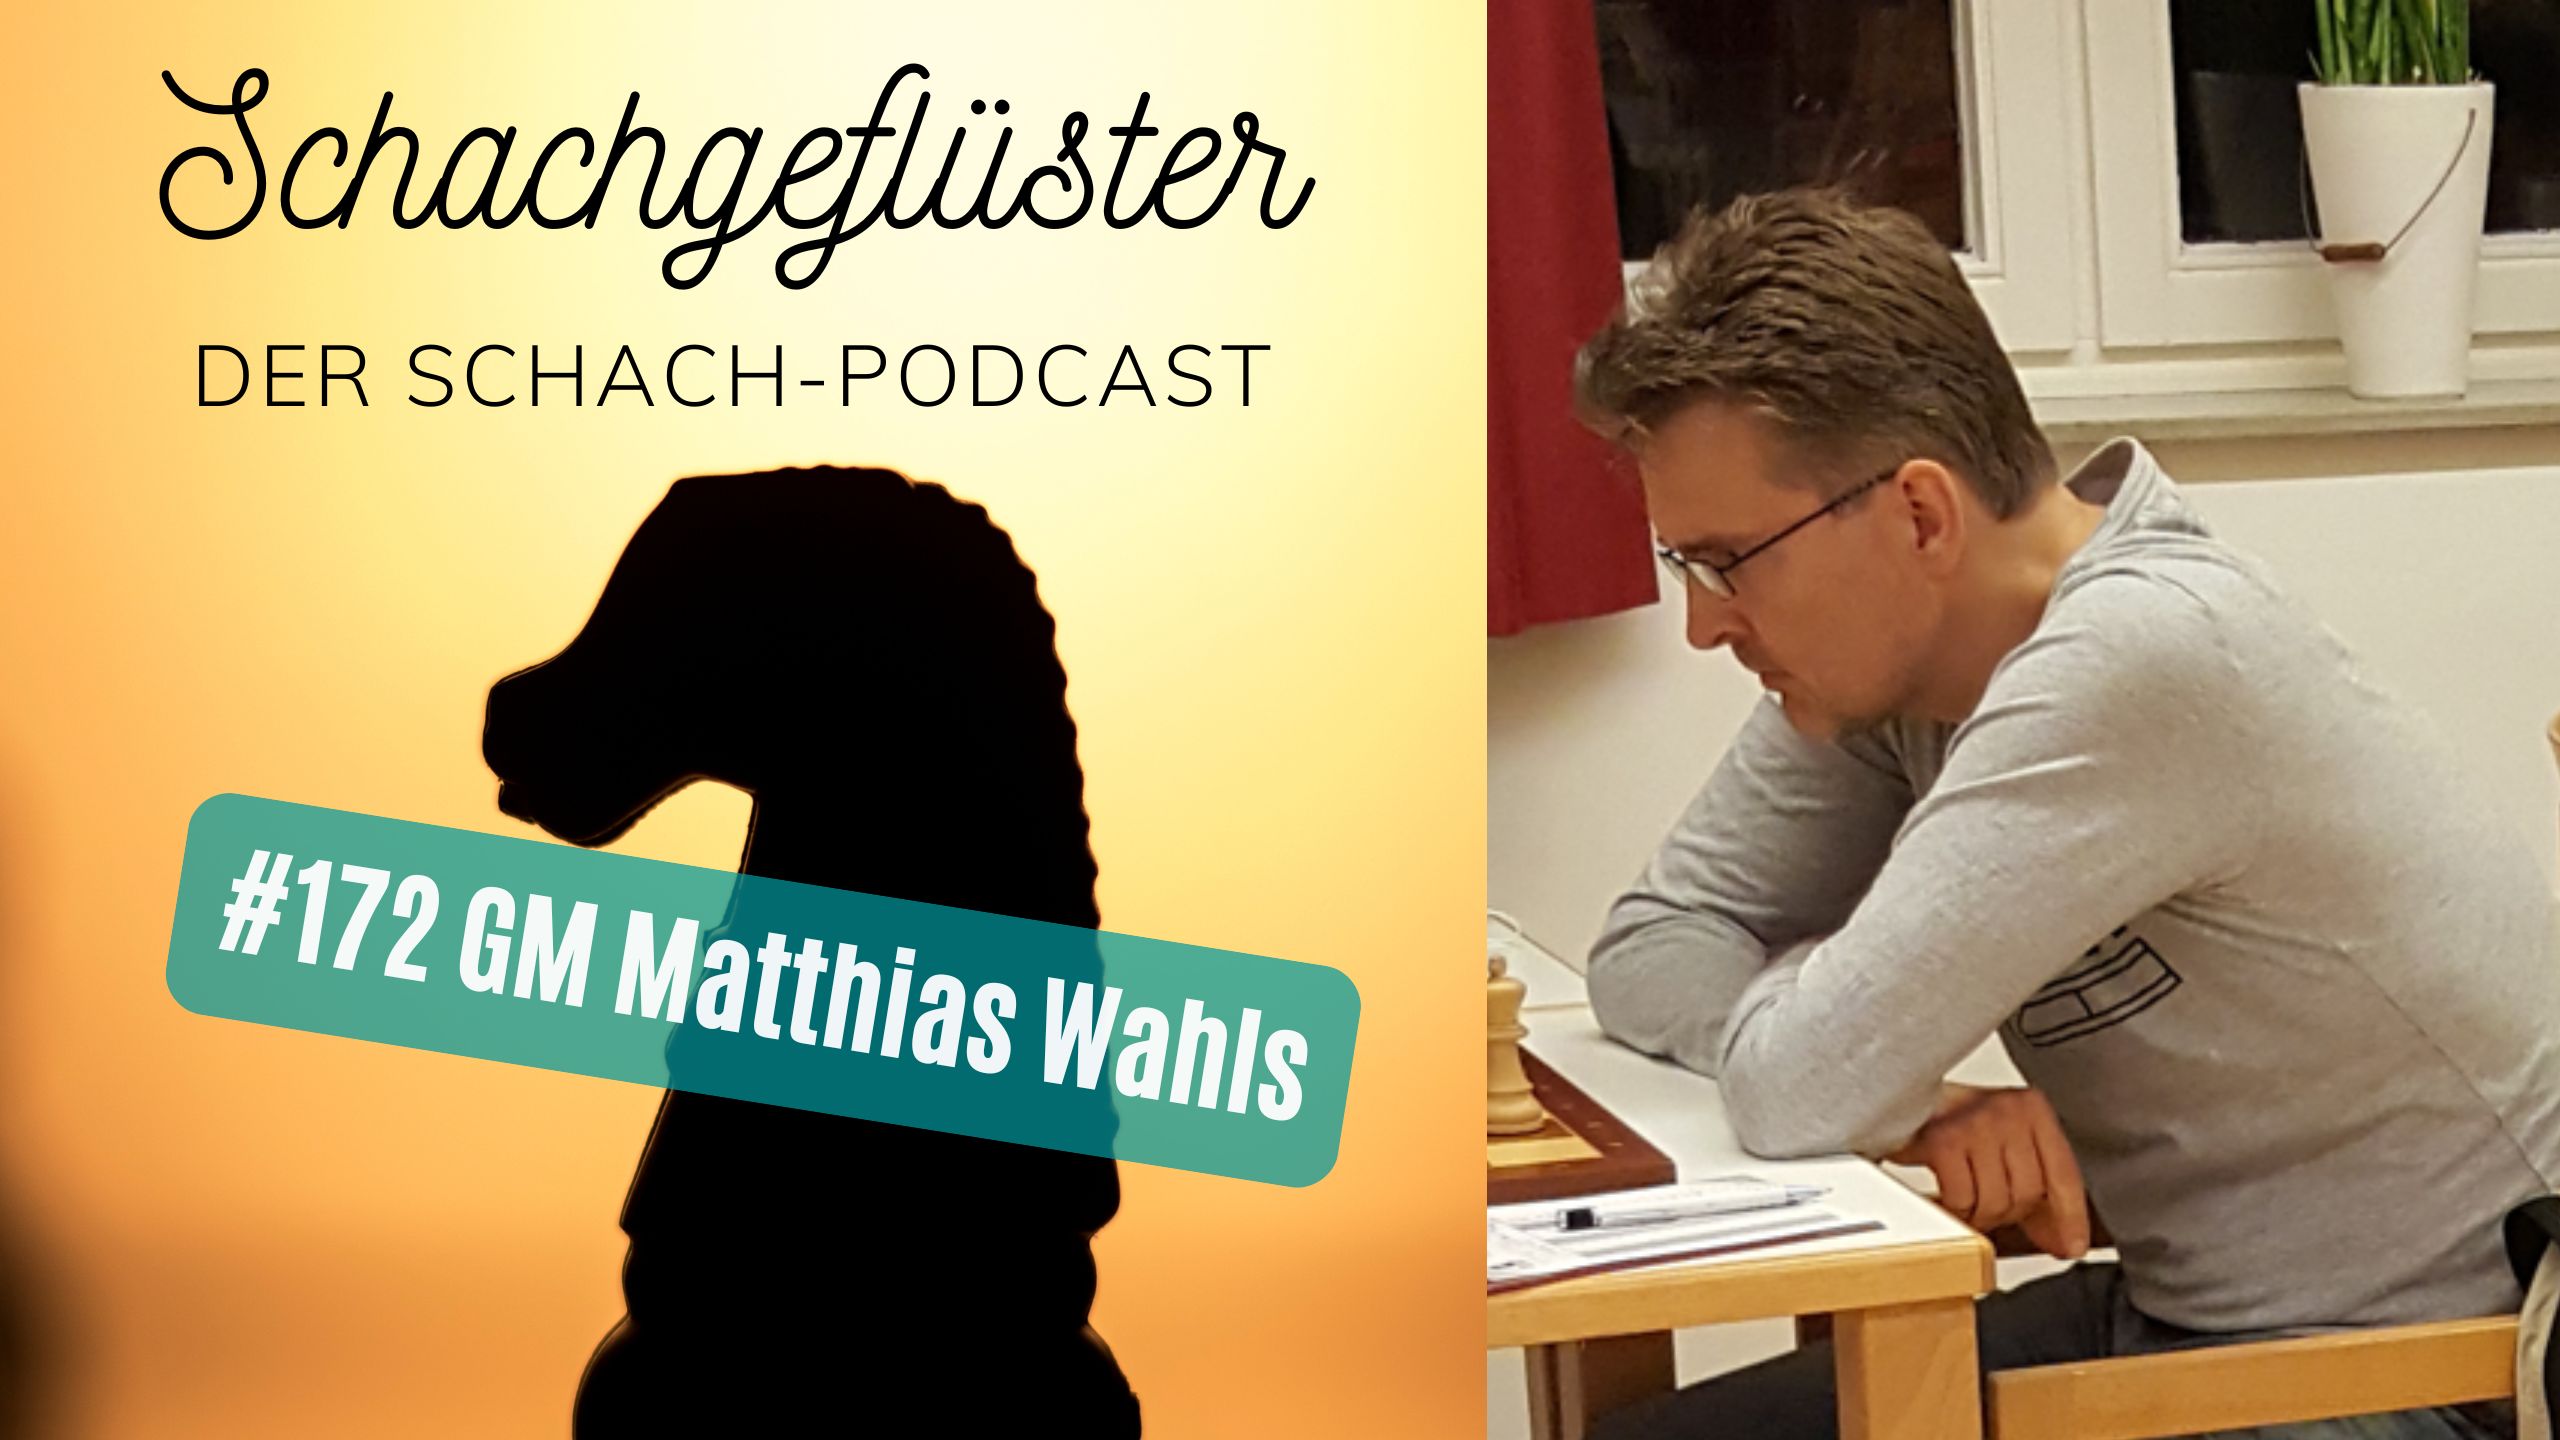 Matthias Wahls